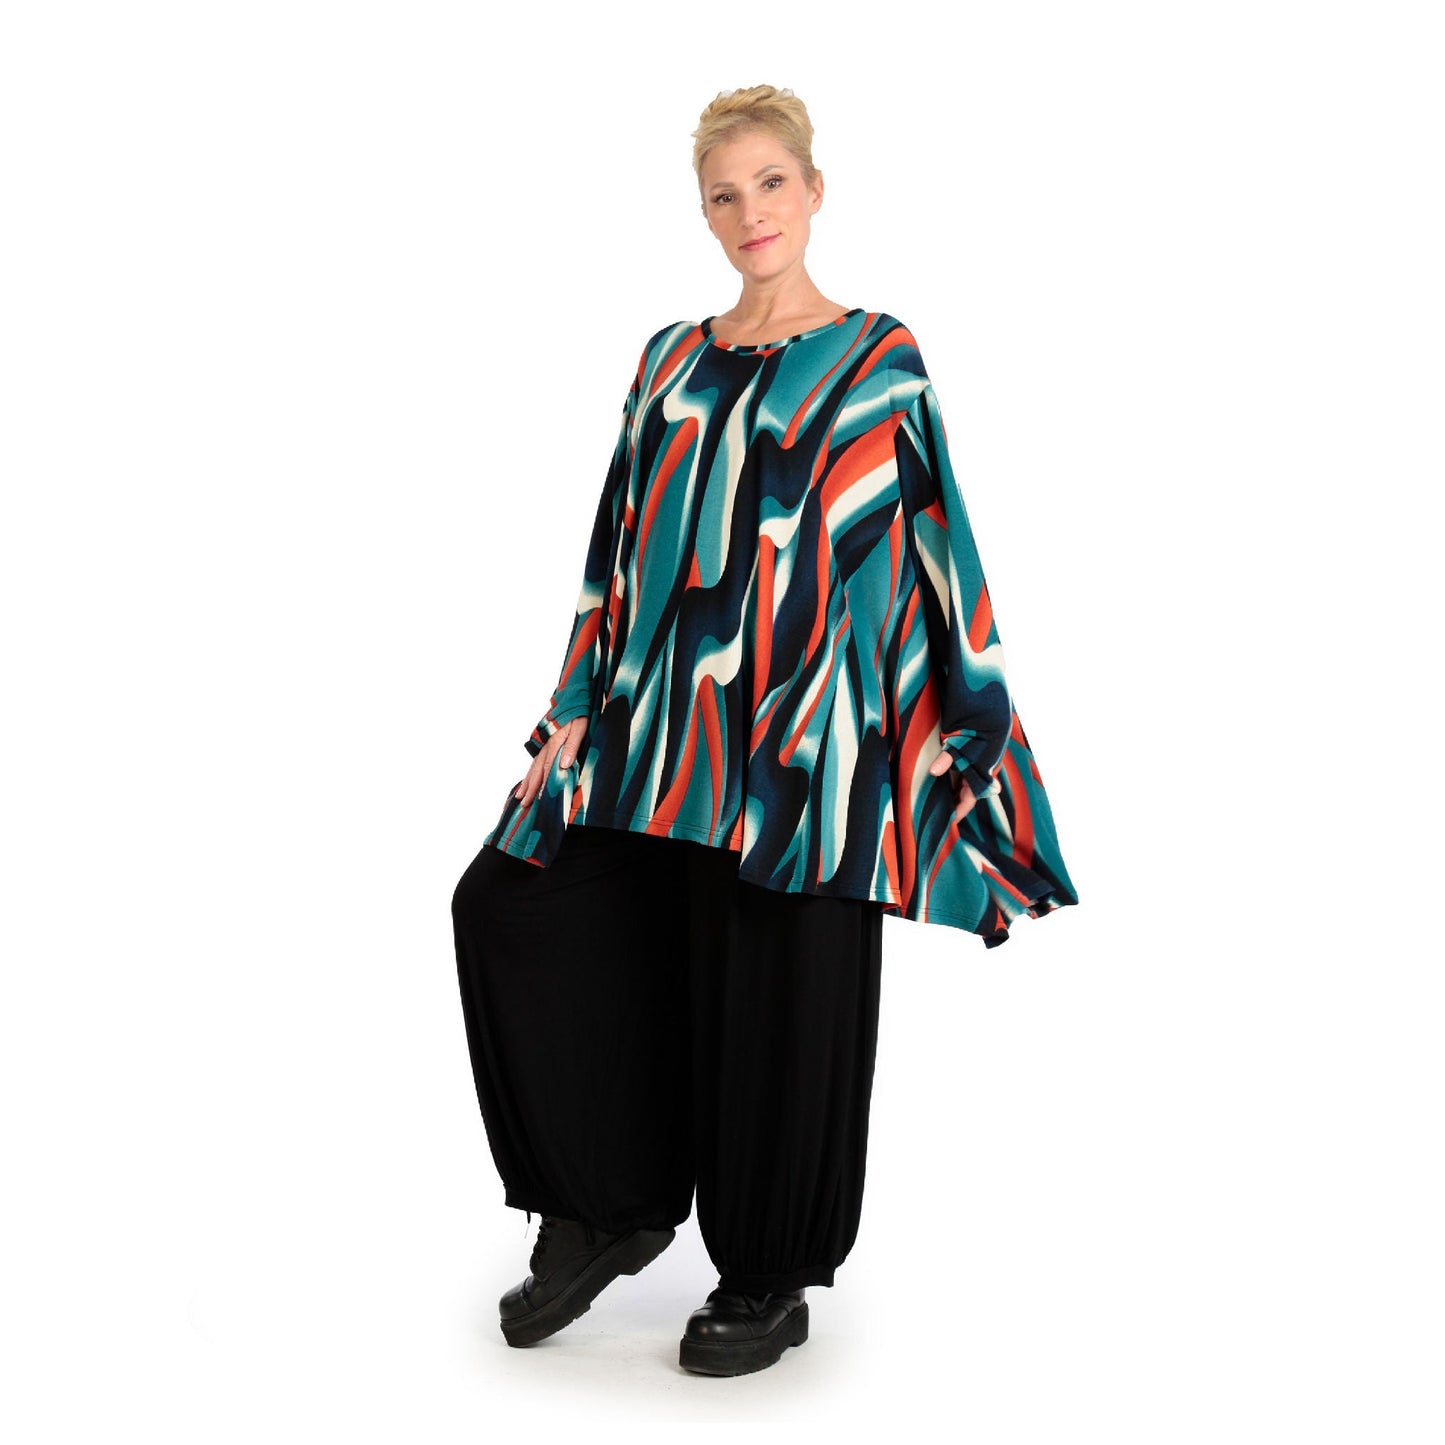 Winter big shirt in A-shape made of soft fine knit quality, Aurora in blue-orange-black